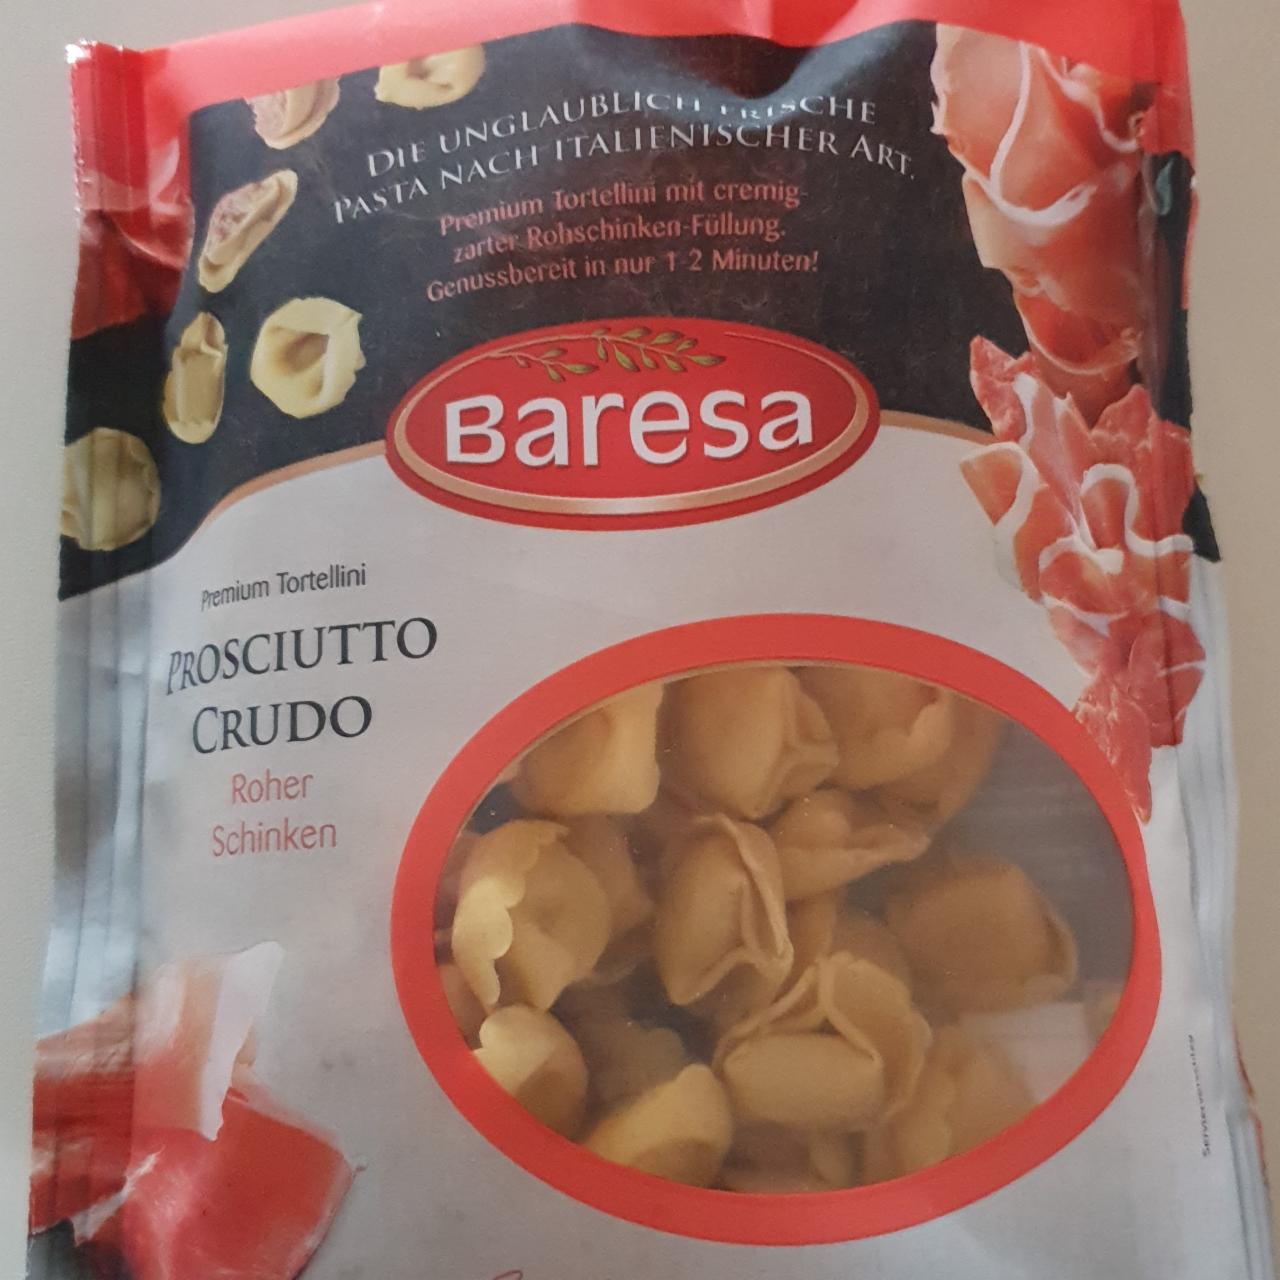 Fotografie - Premium Tortellini Prosciutto crudo Baresa